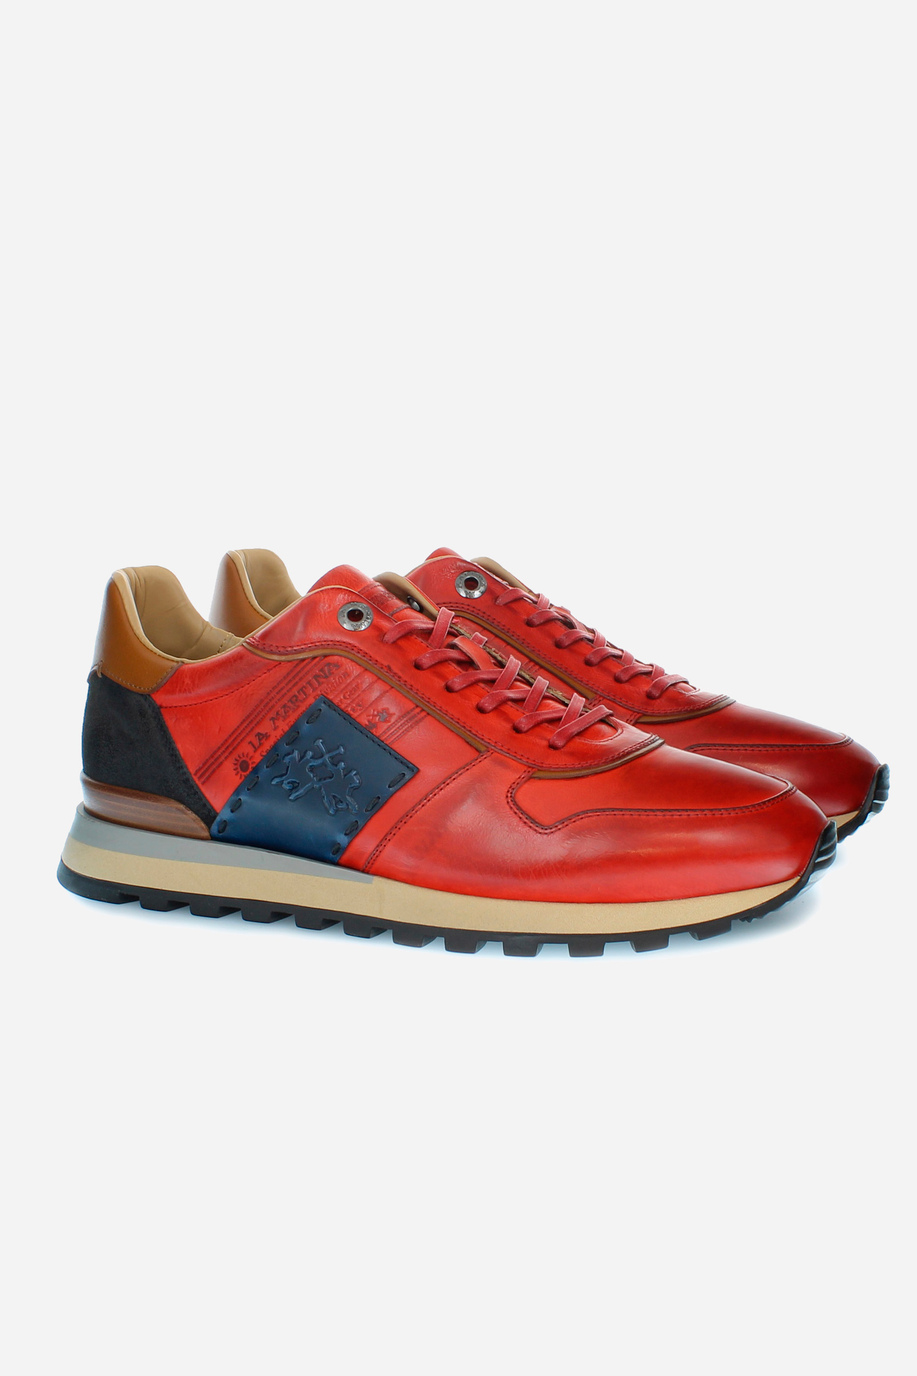 Las mejores ofertas en Zapatos de gamuza roja Louis Vuitton casual